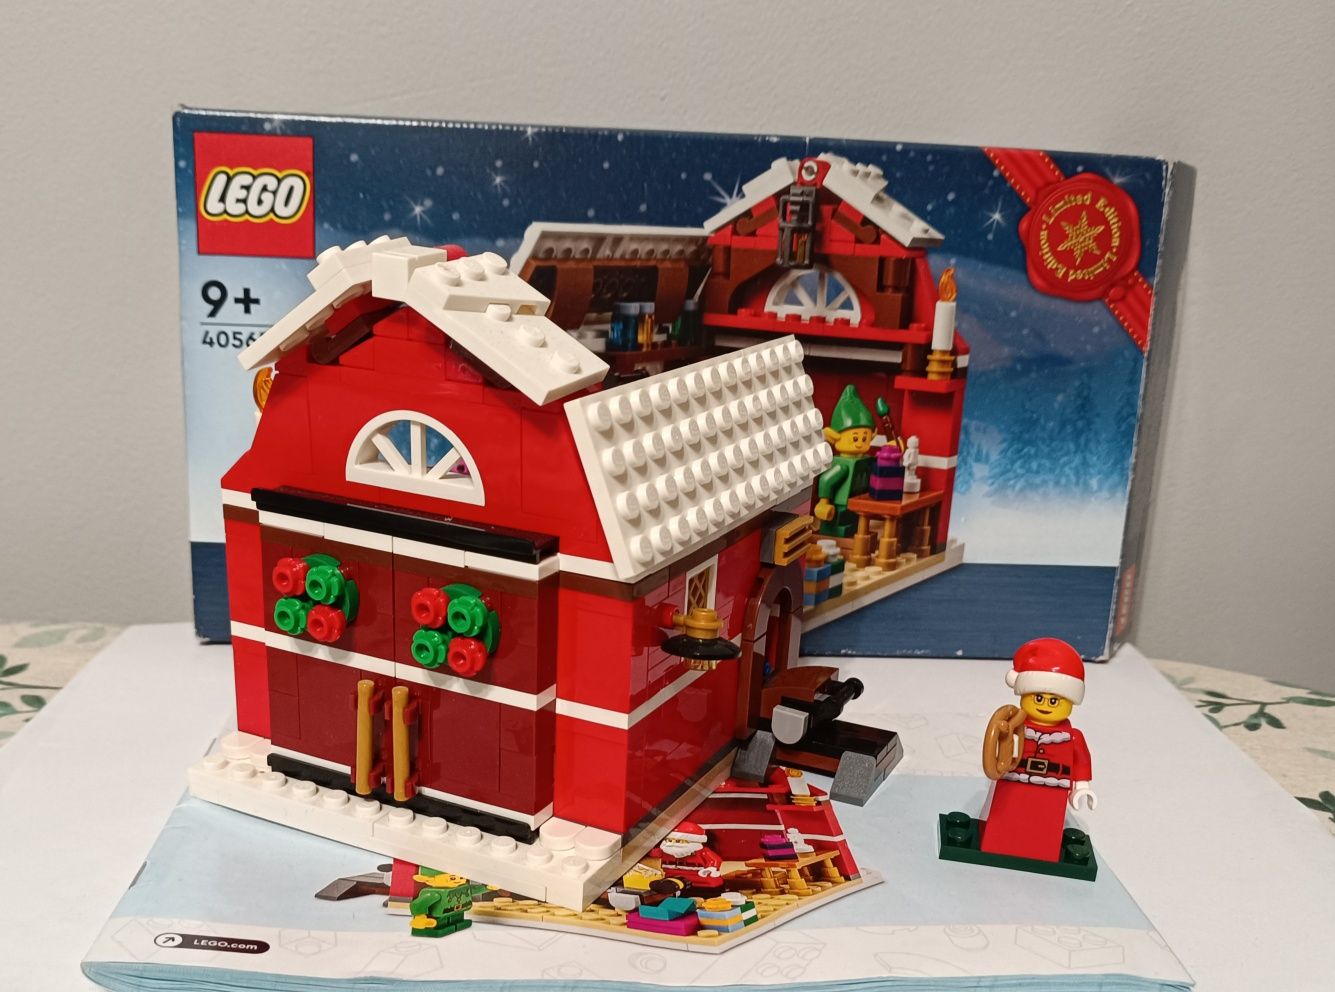 LEGO 40565 Warsztat Świętego Mikołaja plus gratis